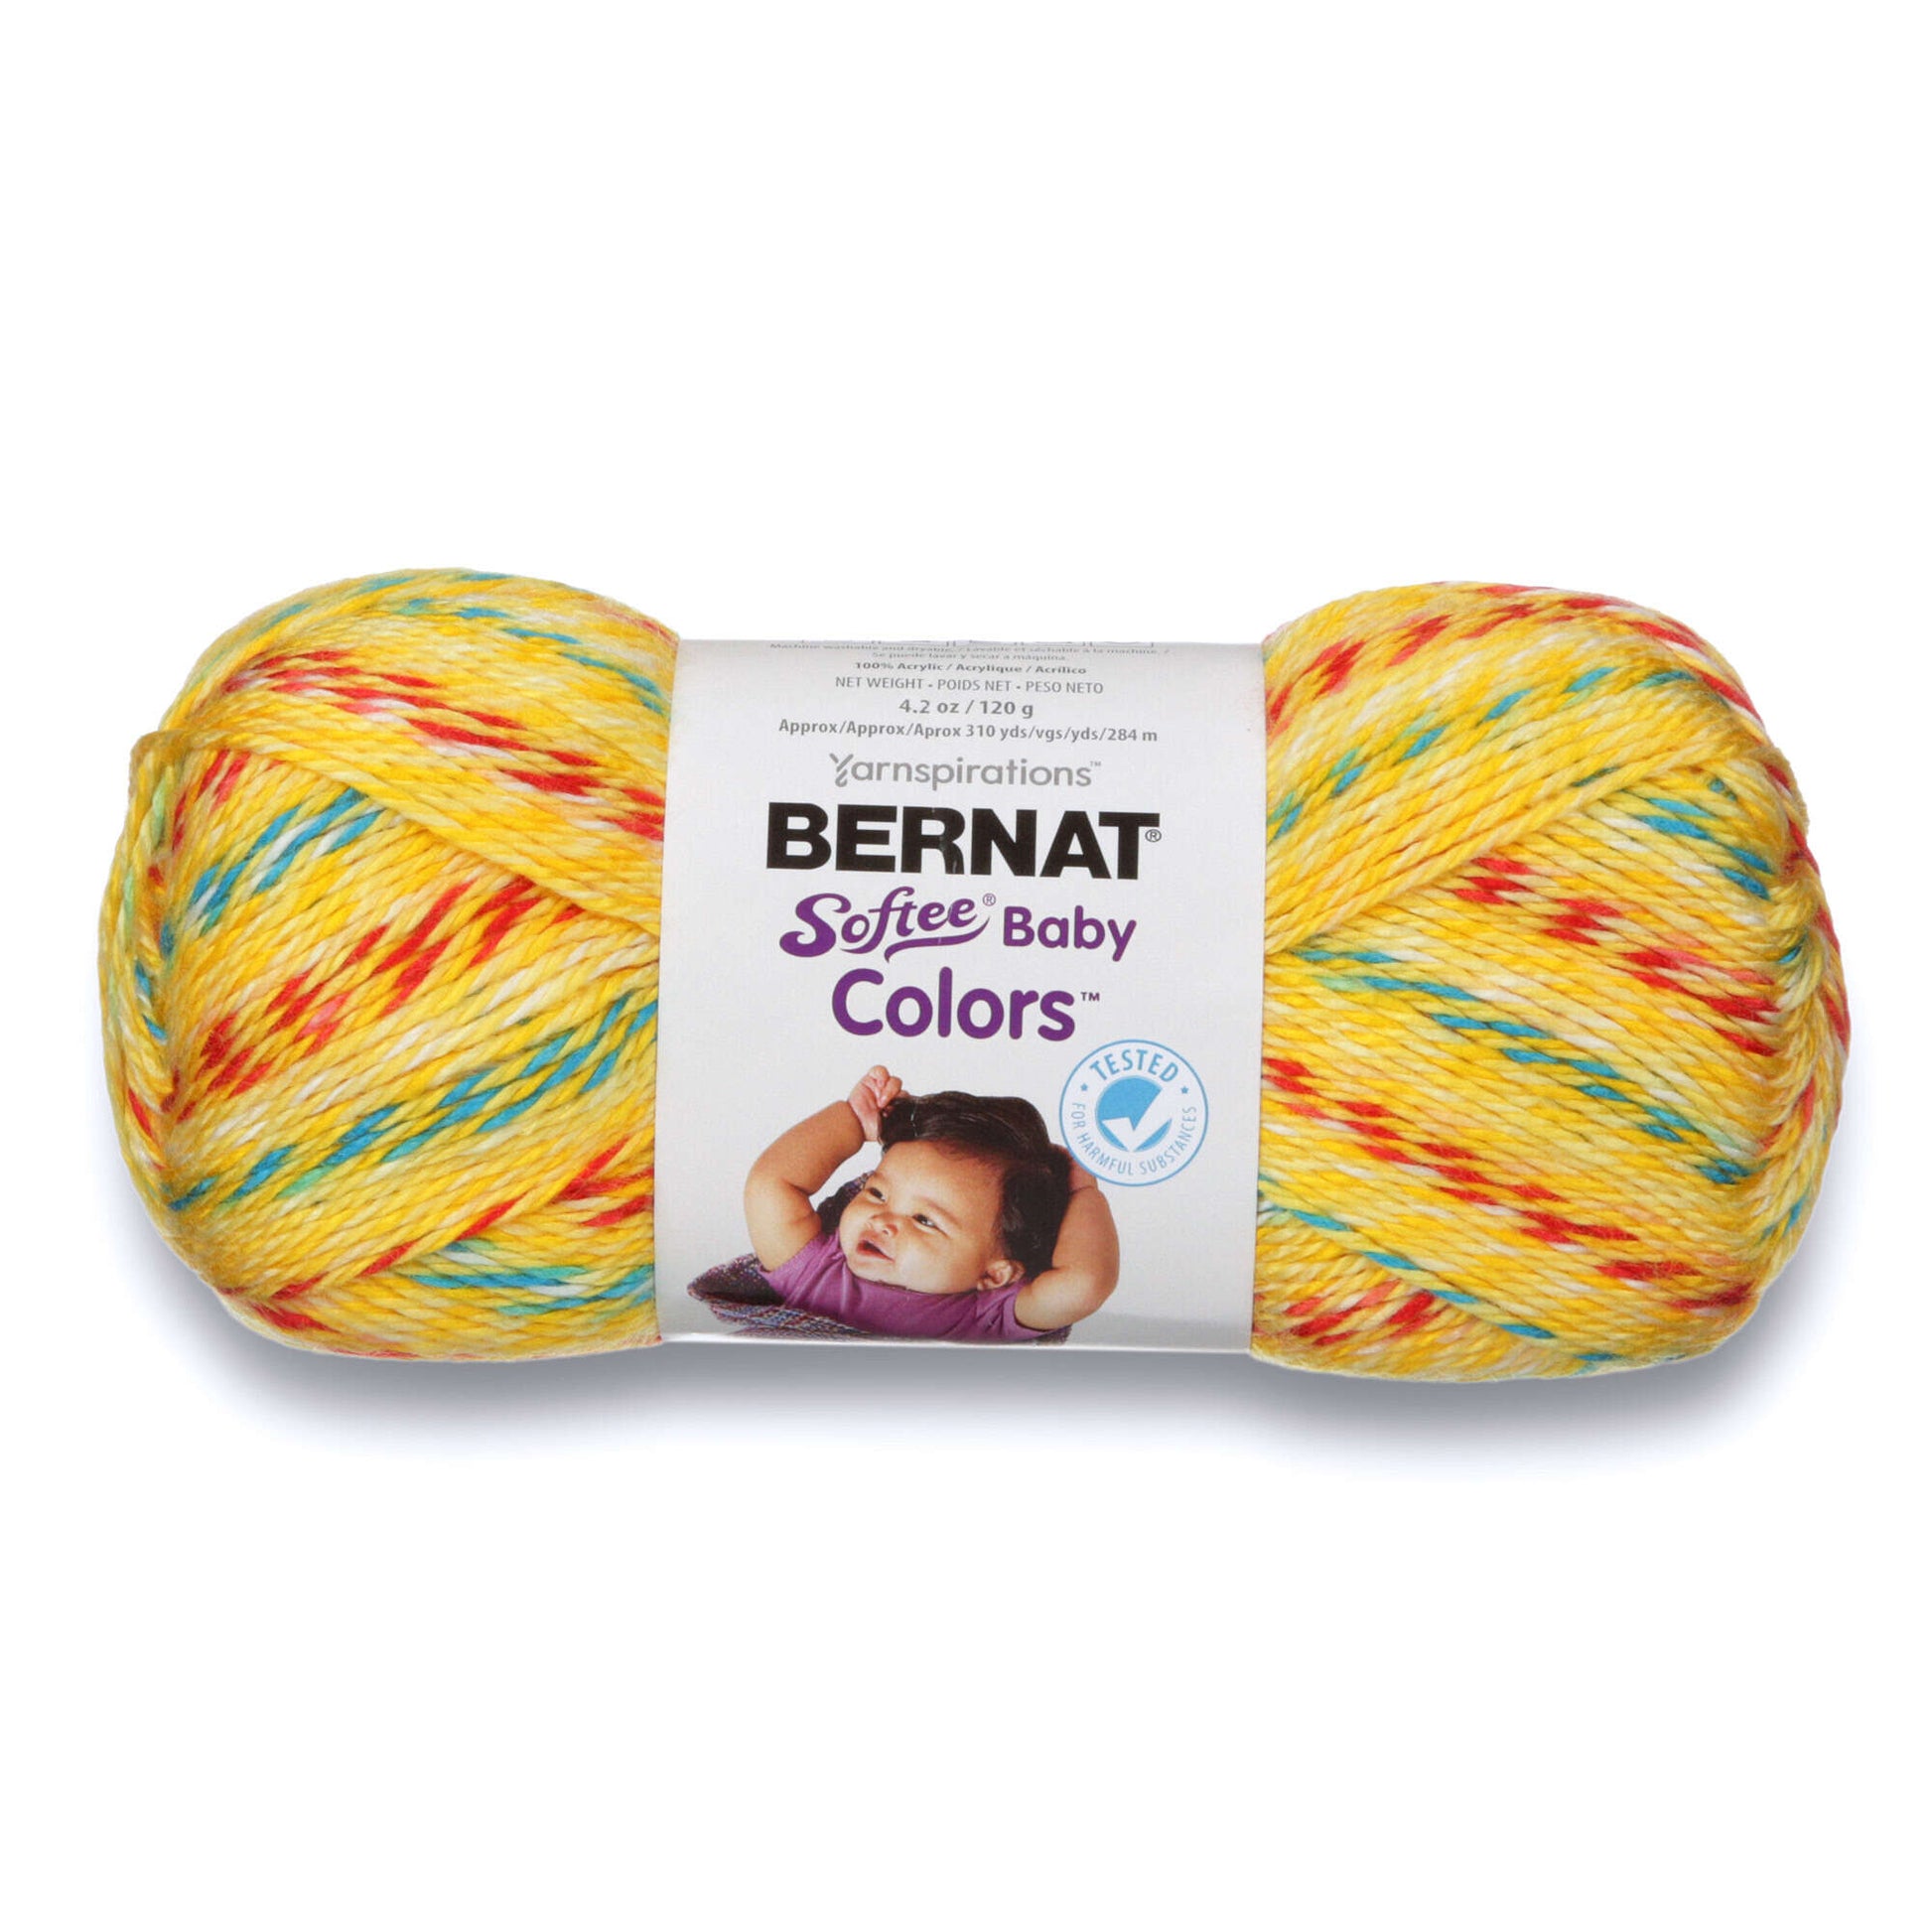 Bernat Softee Baby Stripes Yarn (250g/8.8oz) - Clearance Shades